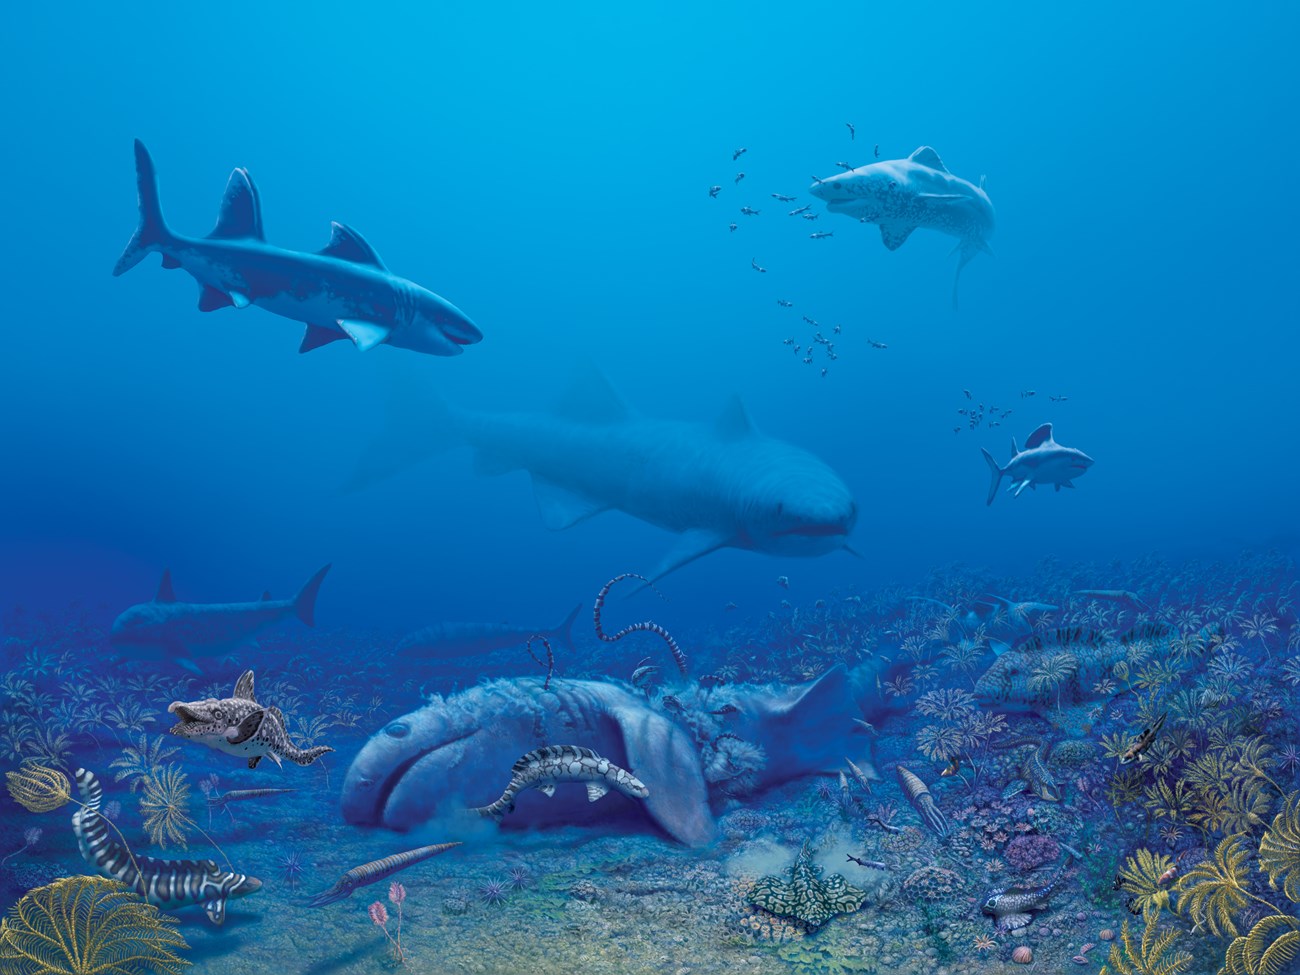 artist's mural of prehistoric under water scene with sharks